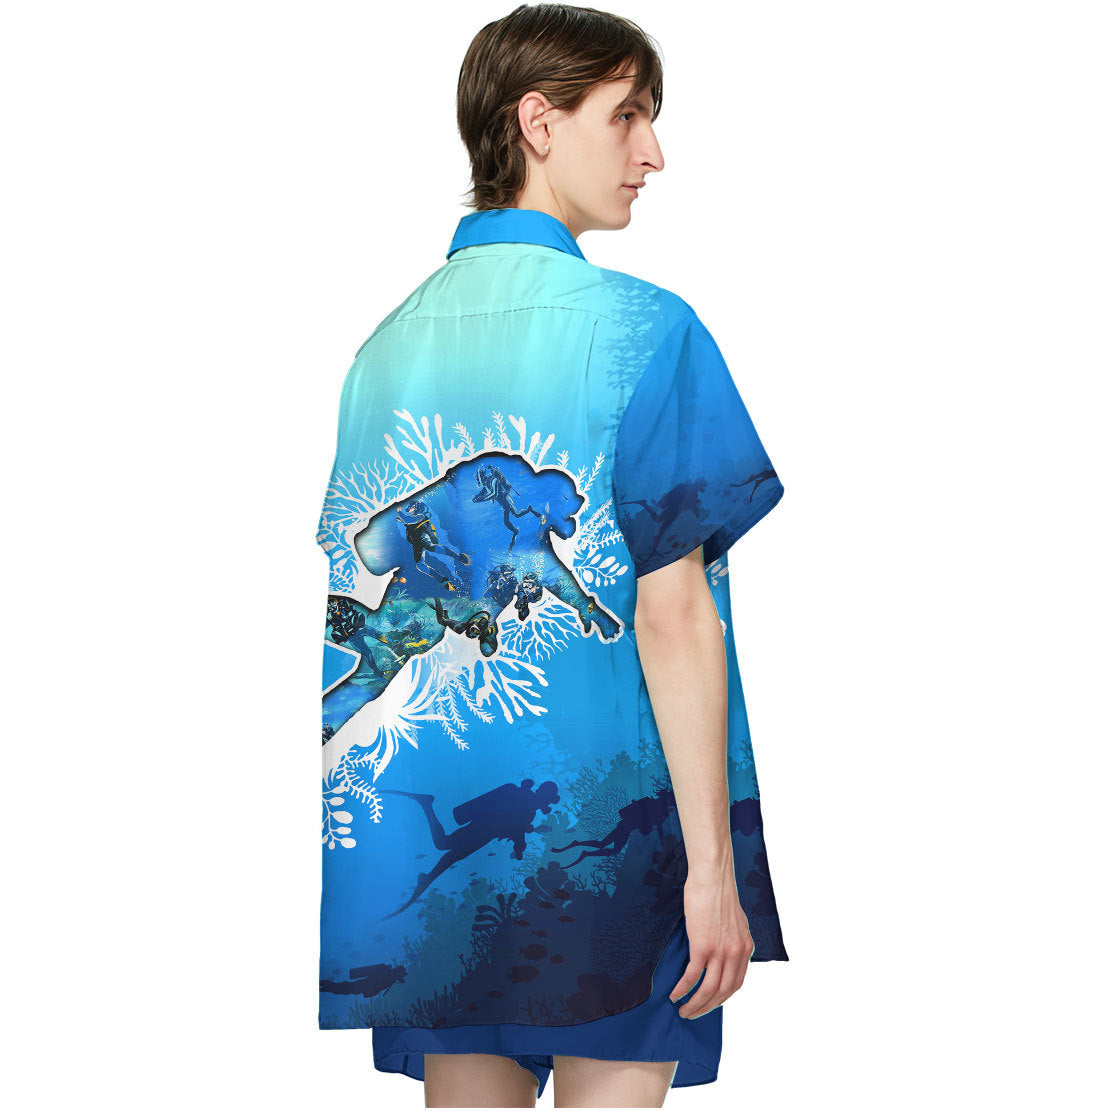 Scuba Diving Hawaii Shirt 5